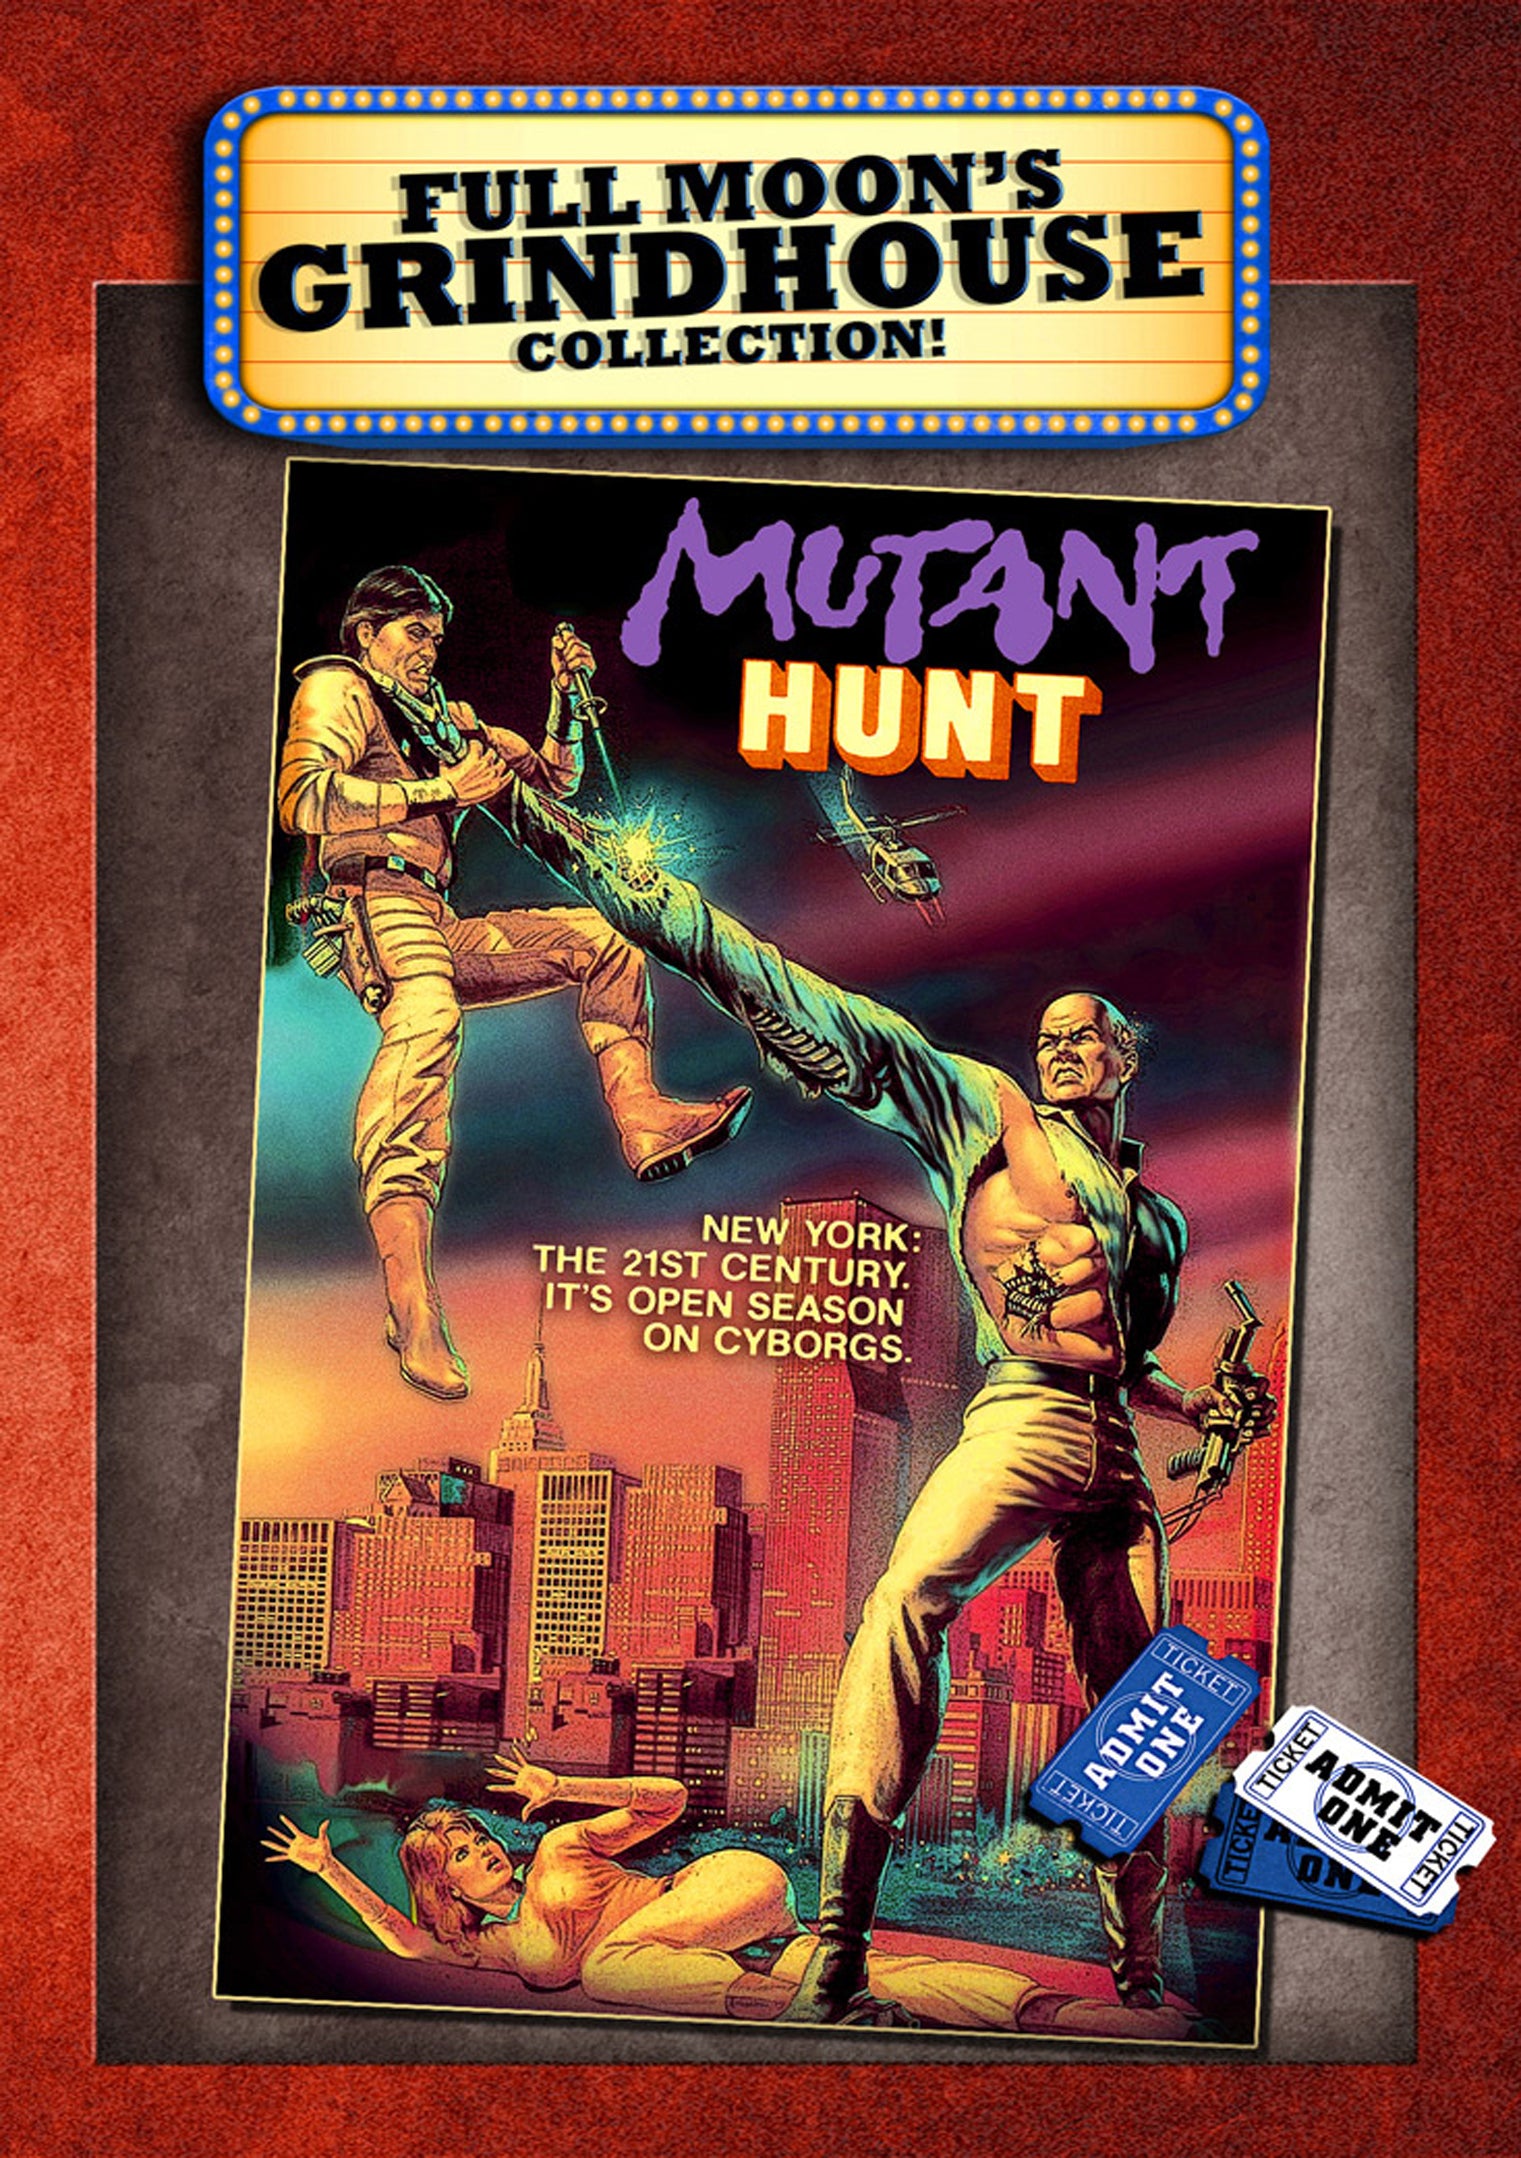 MUTANT HUNT DVD